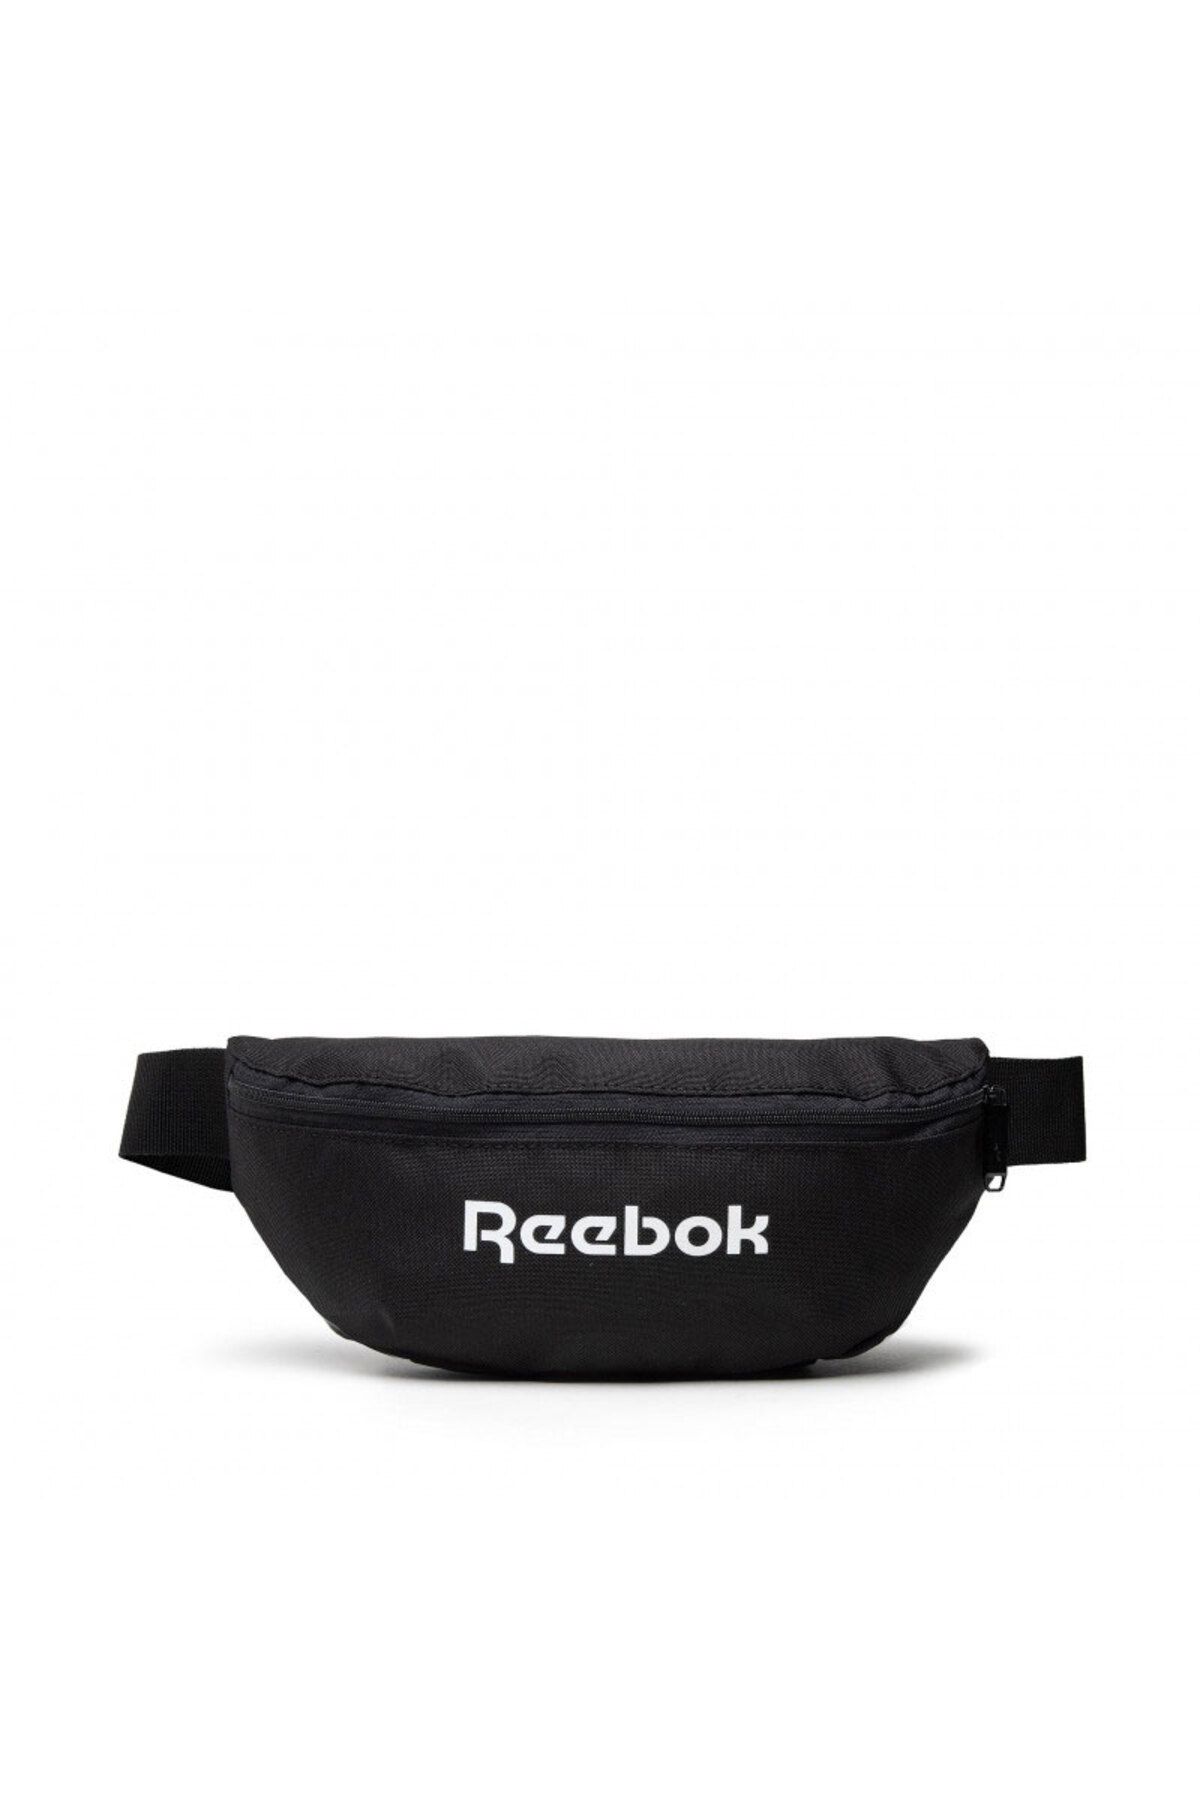 Reebok Act Core Ll Waistbag